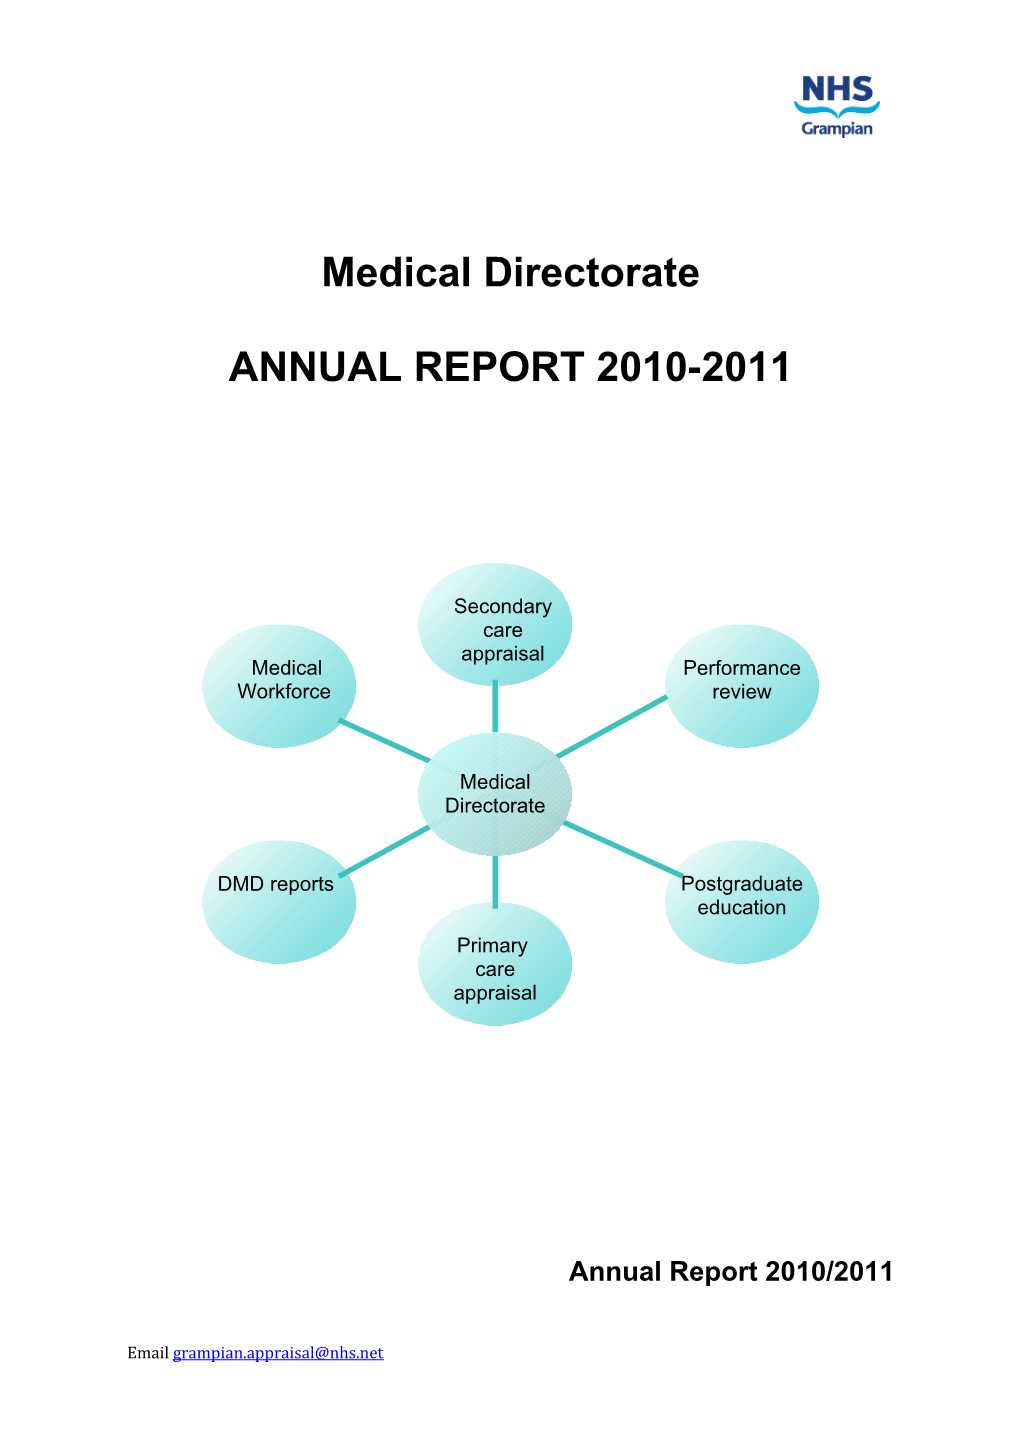 Medical Directorate Annual Report 2010/11